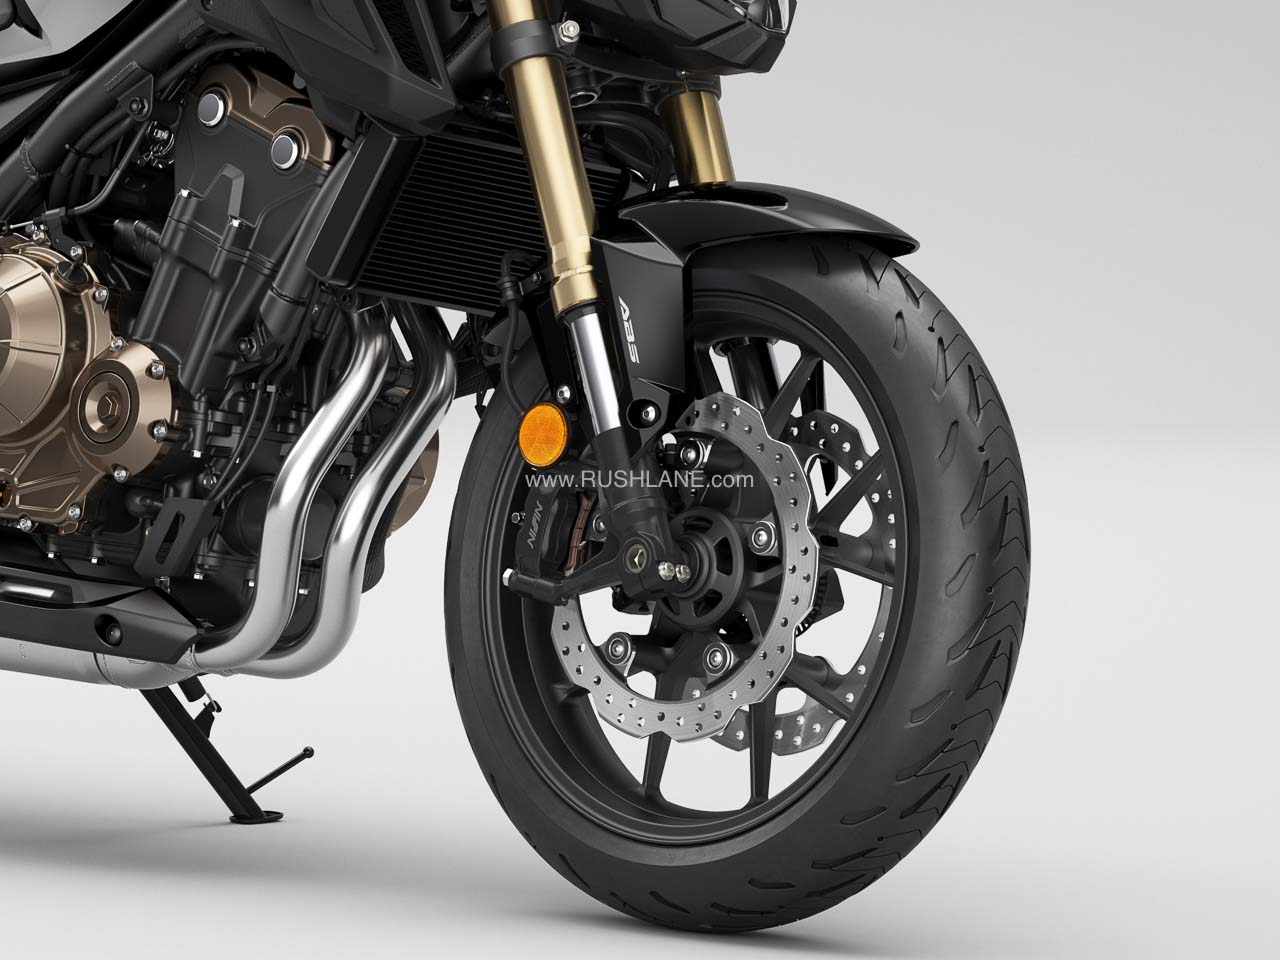 2022 Honda CB500X Buyer's Guide: Specs, Photos, Price